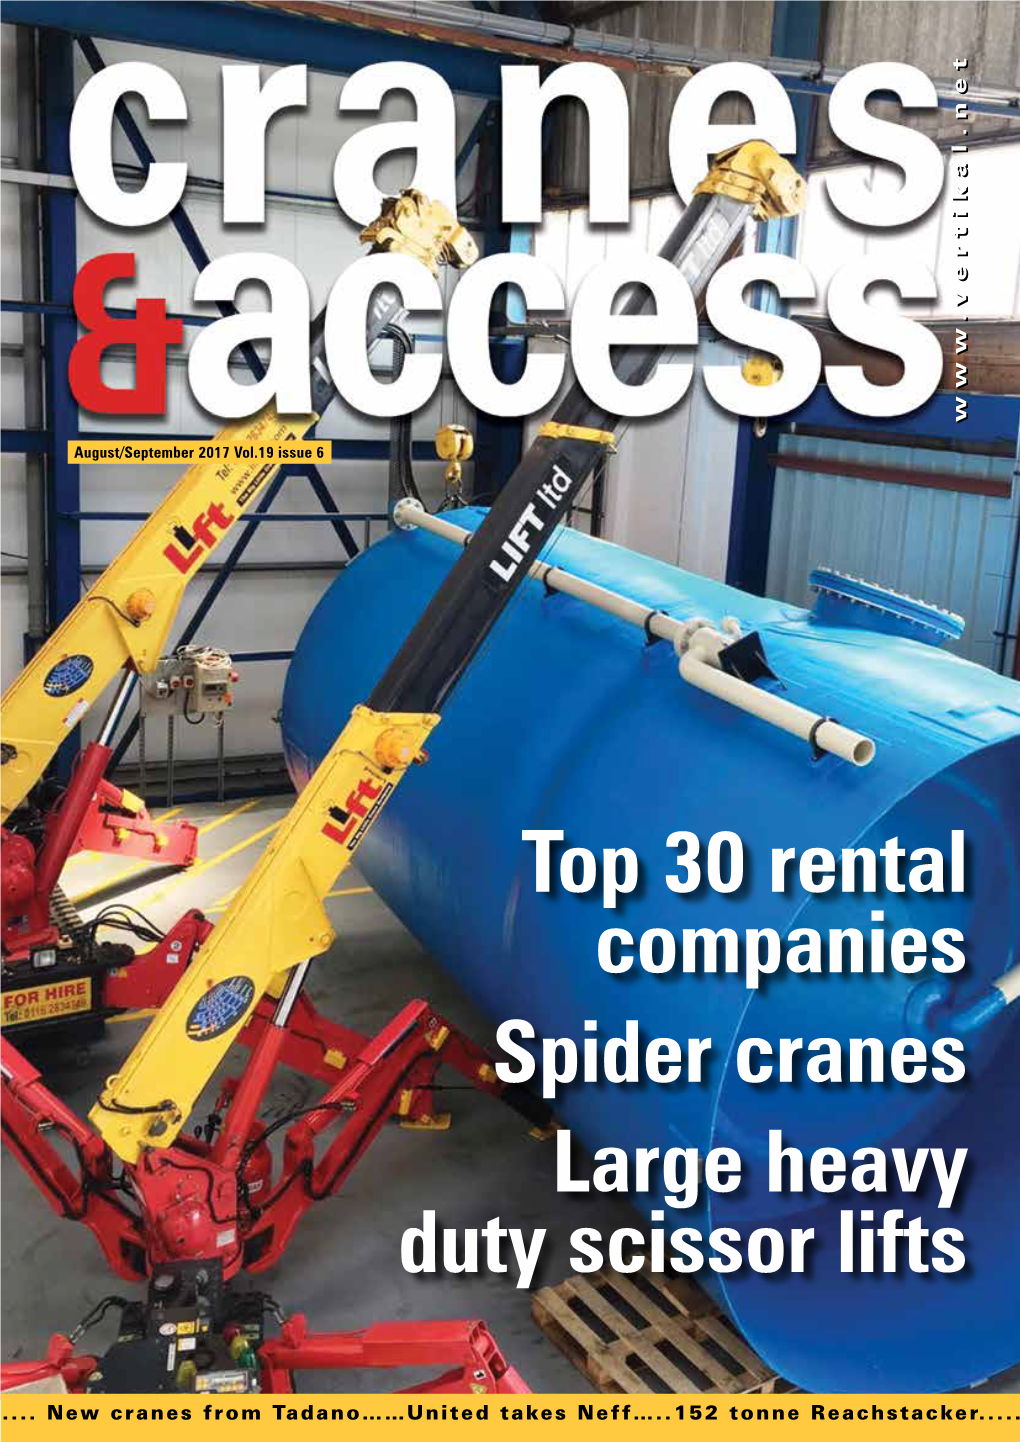 Top 30 Rental Companies Spider Cranes Large Heavy Duty Scissor Lifts